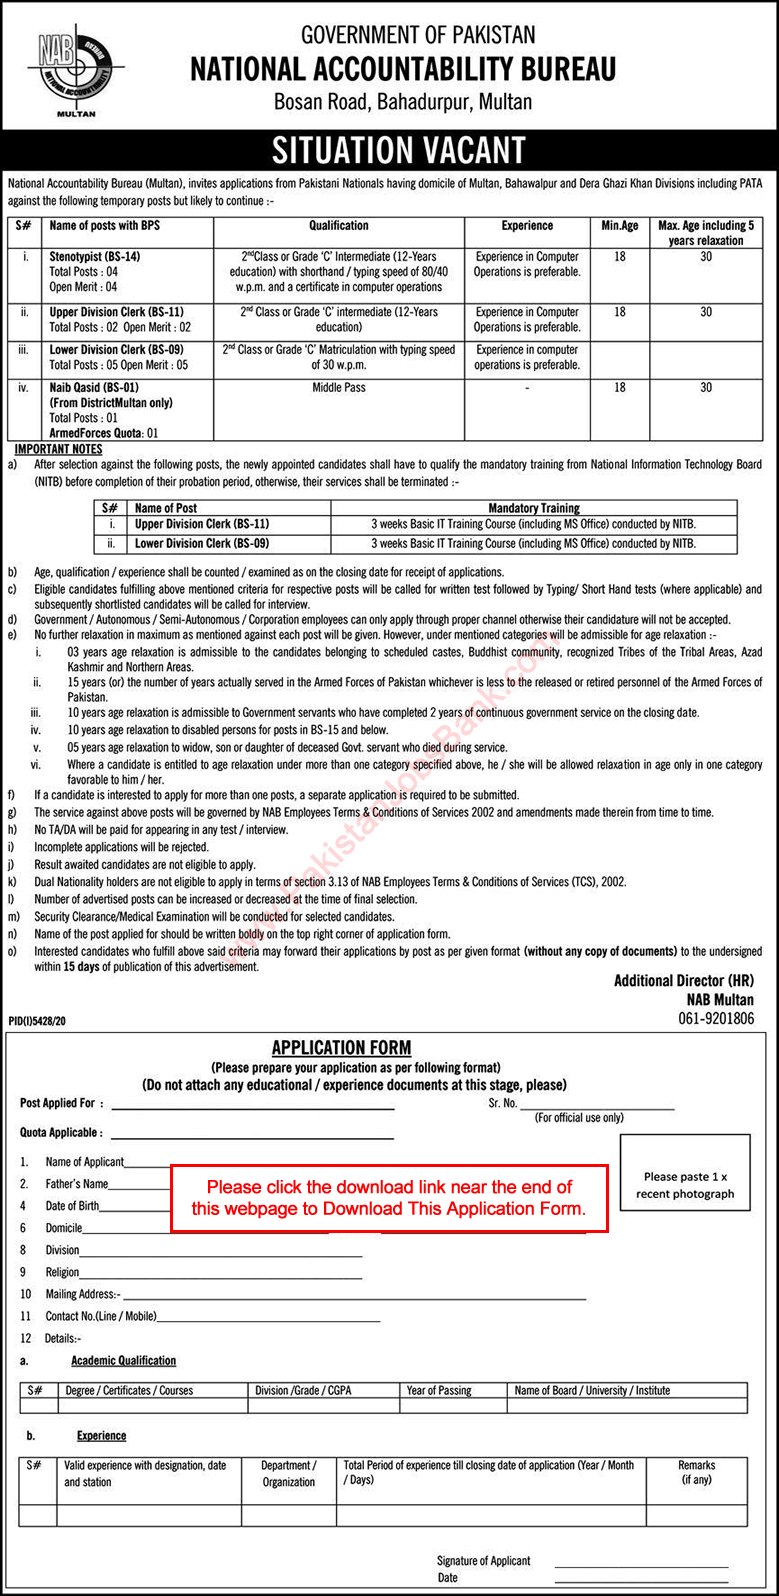 NAB Multan Jobs 2021 April Application Form National Accountability Bureau Latest